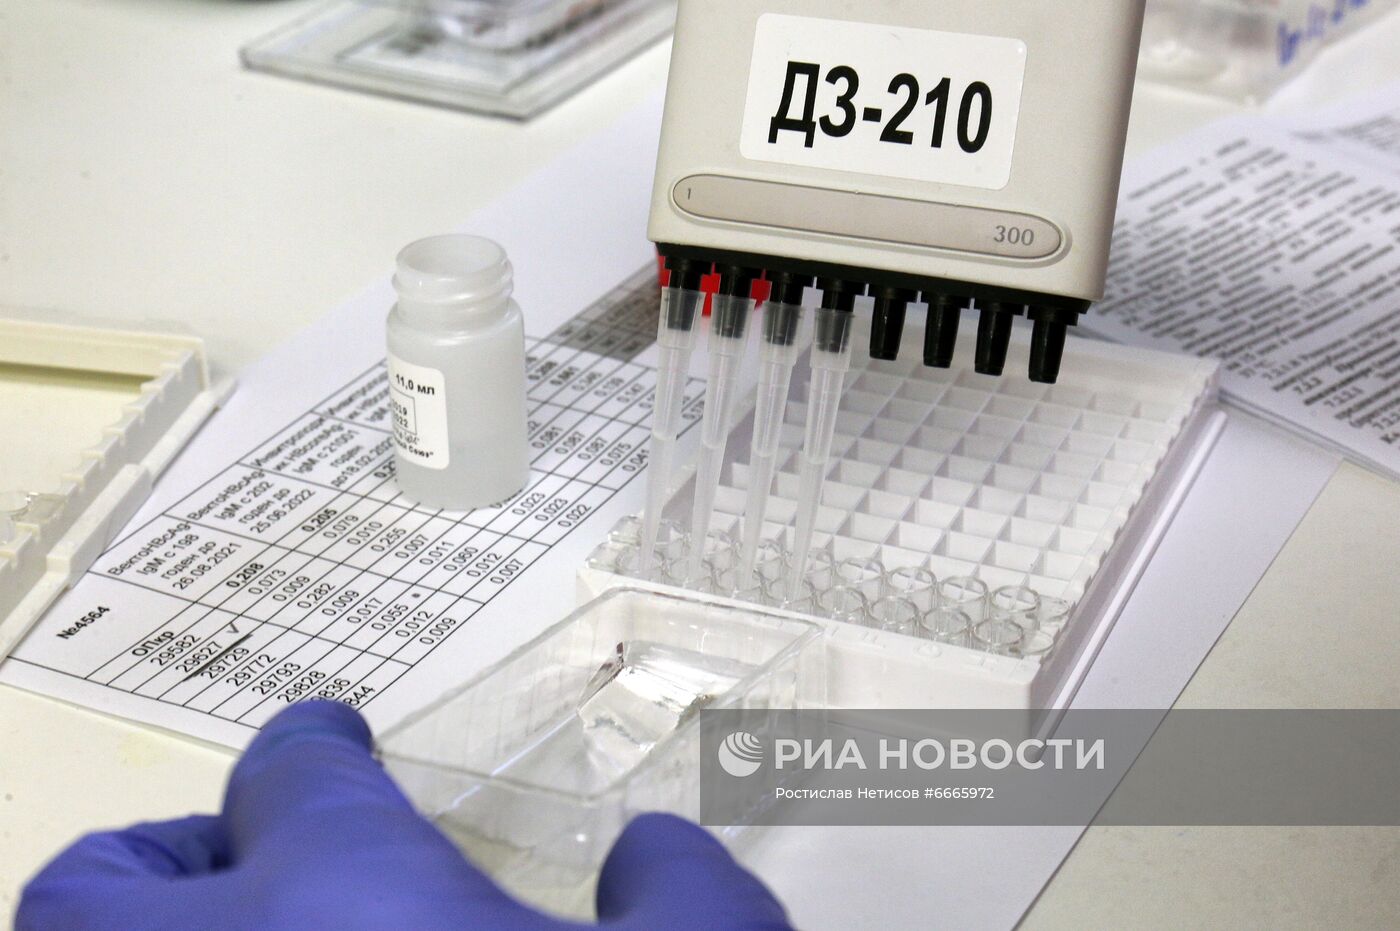 Предприятие "Медико-биологический Союз" в Новосибирске